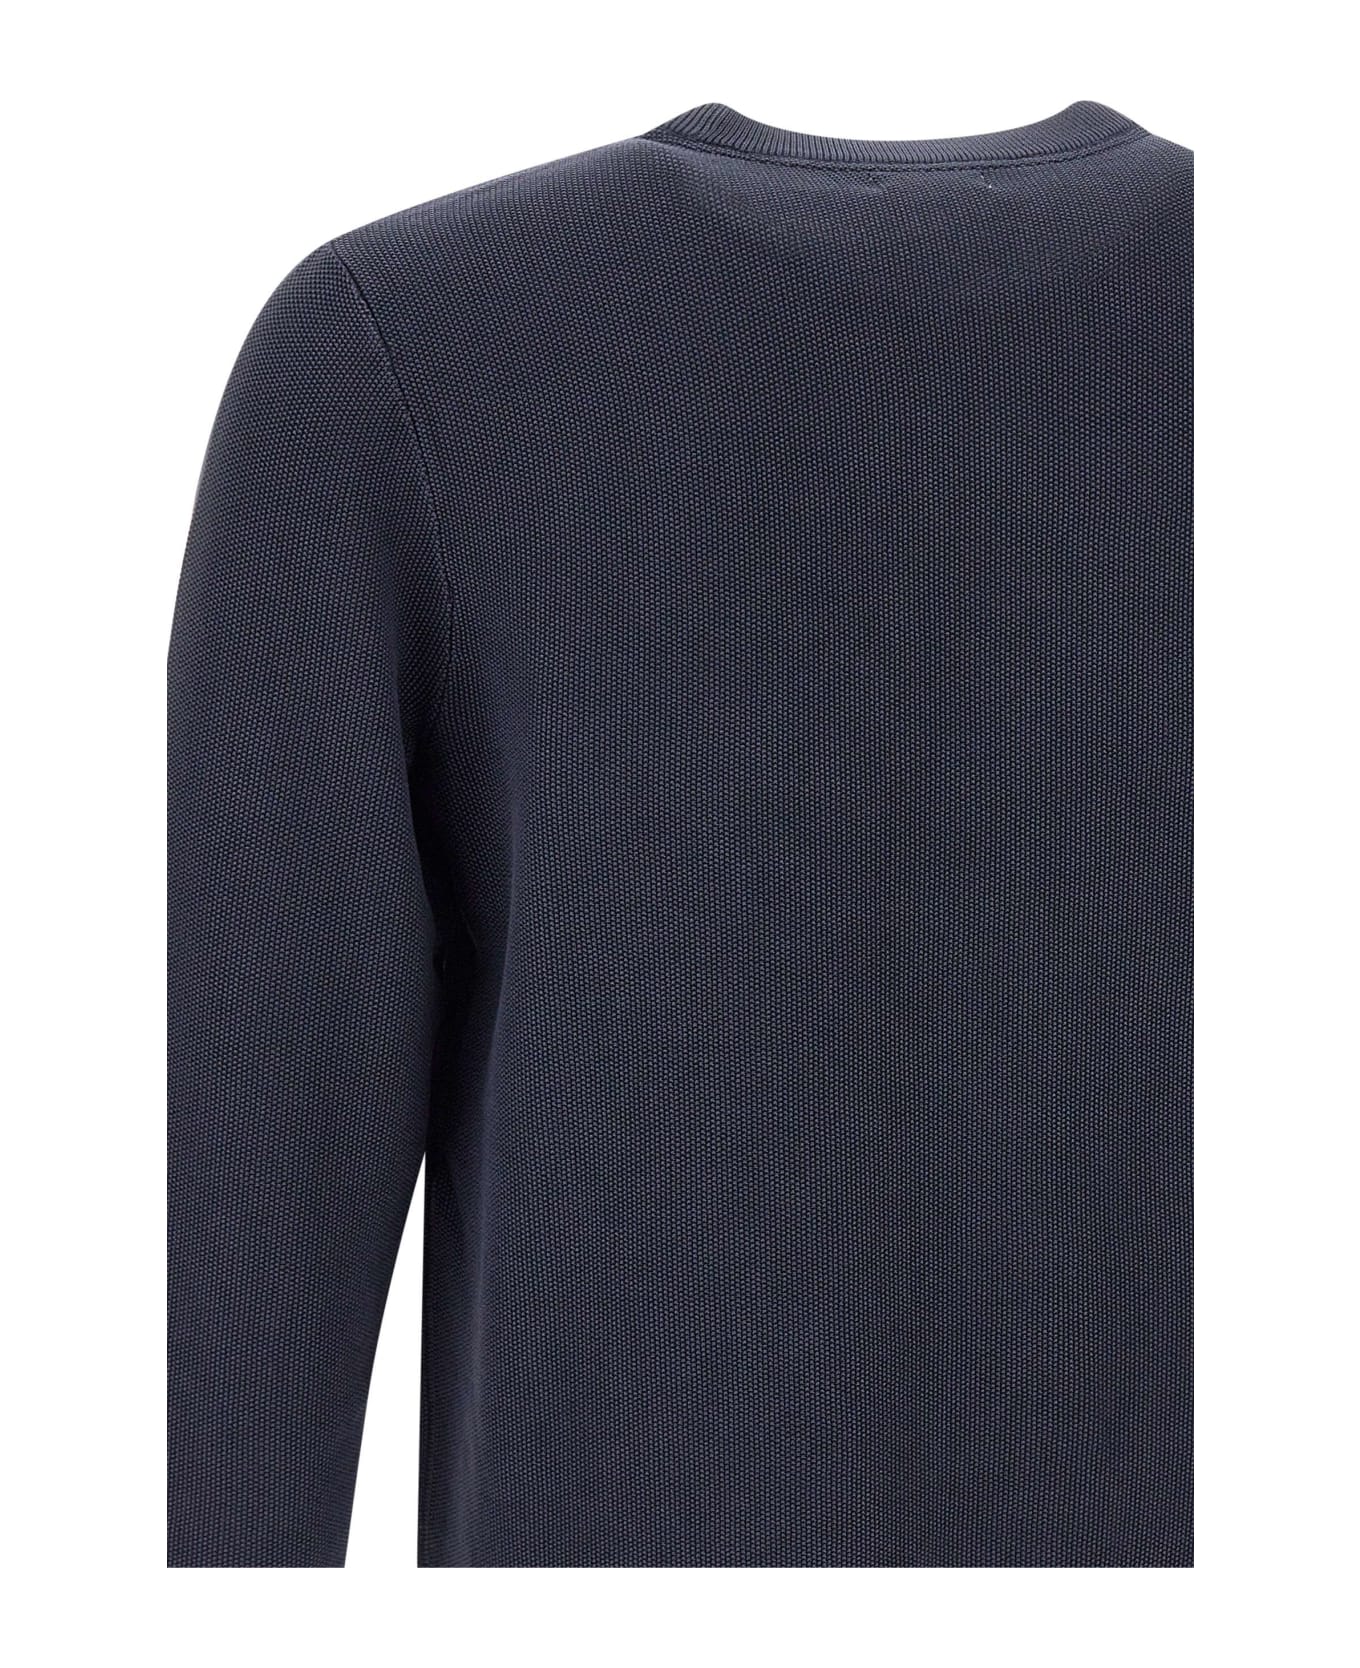 Sun 68 'round Vintage' Cotton Sweater Sweater - NAVY BLUE ニットウェア